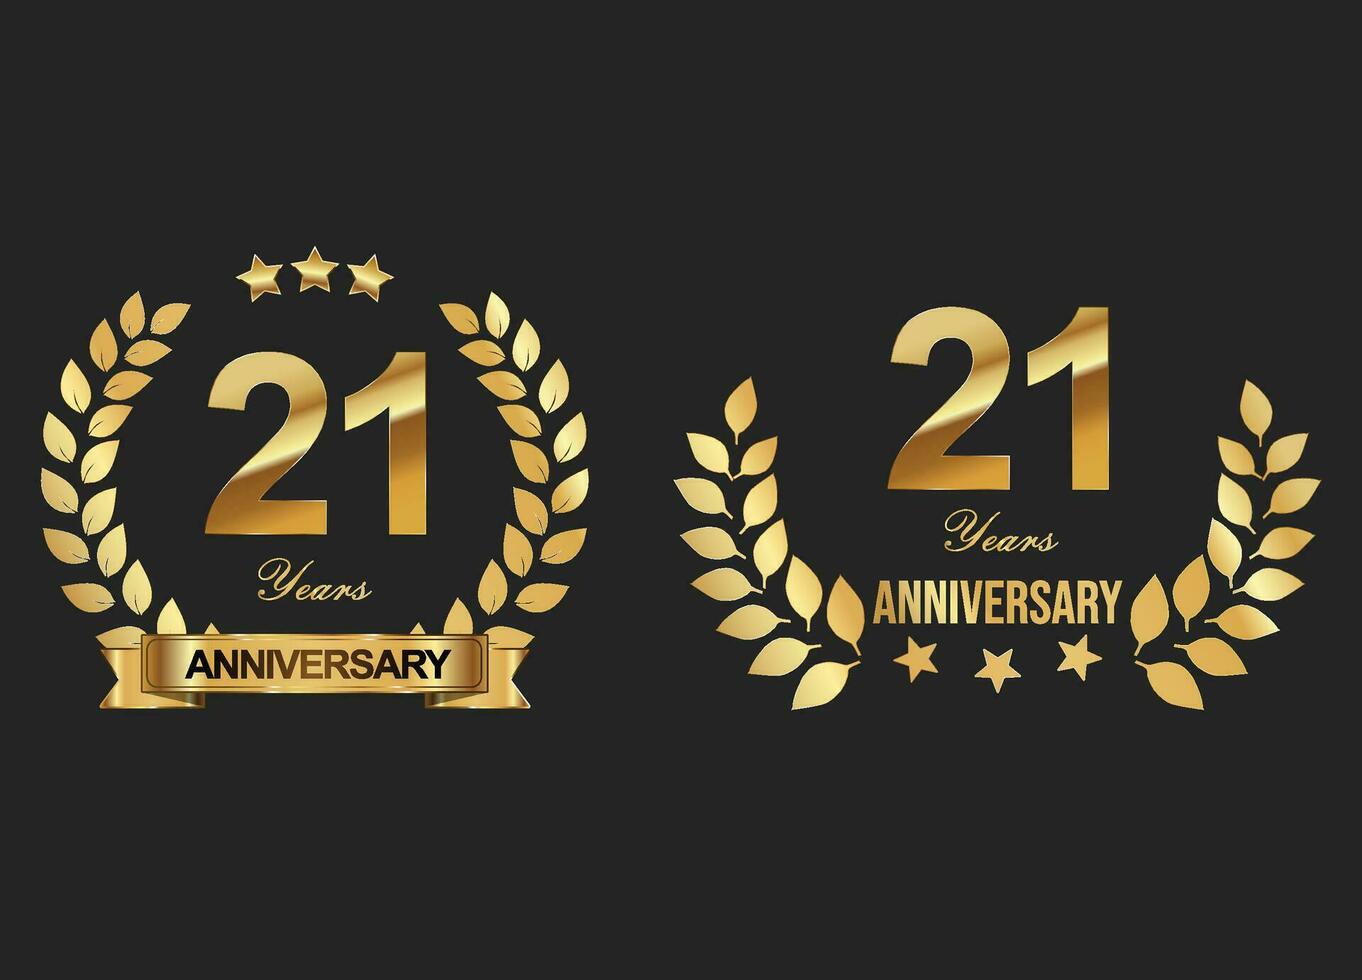 Gold anniversary celebration logo with golden laurel wreath vector illustration